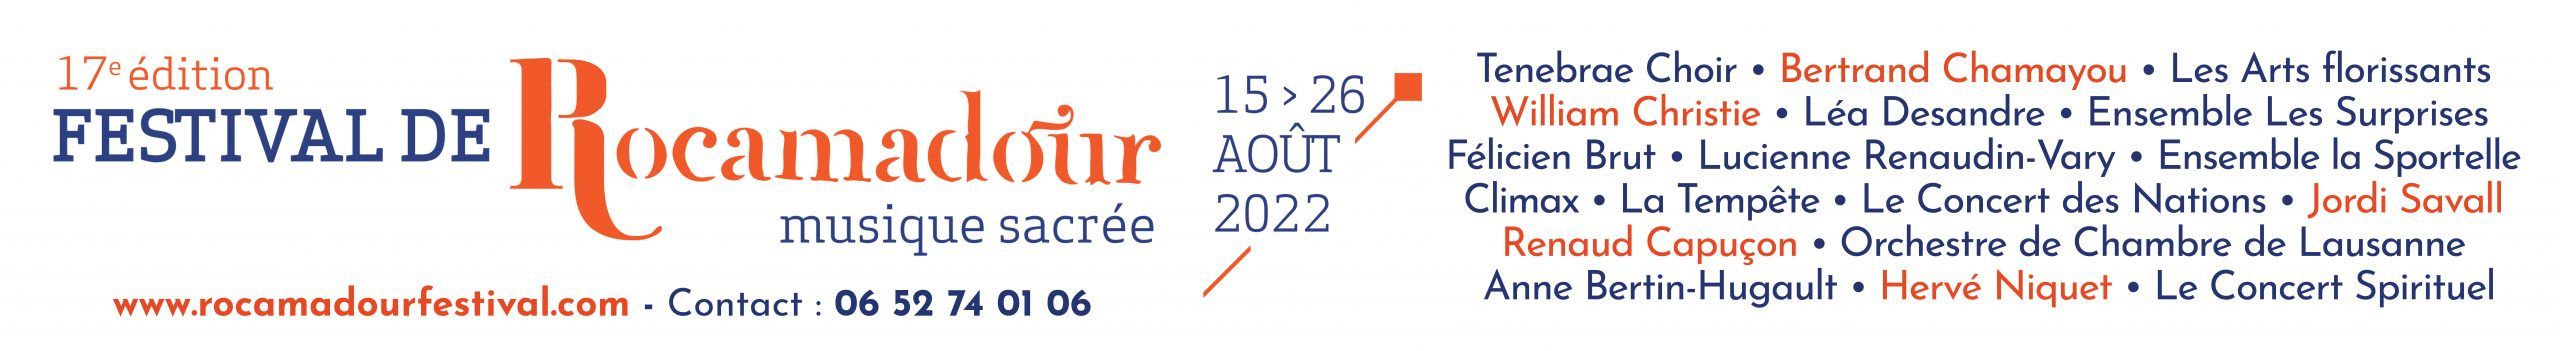 Festival de Rocamadour – Edition 2022